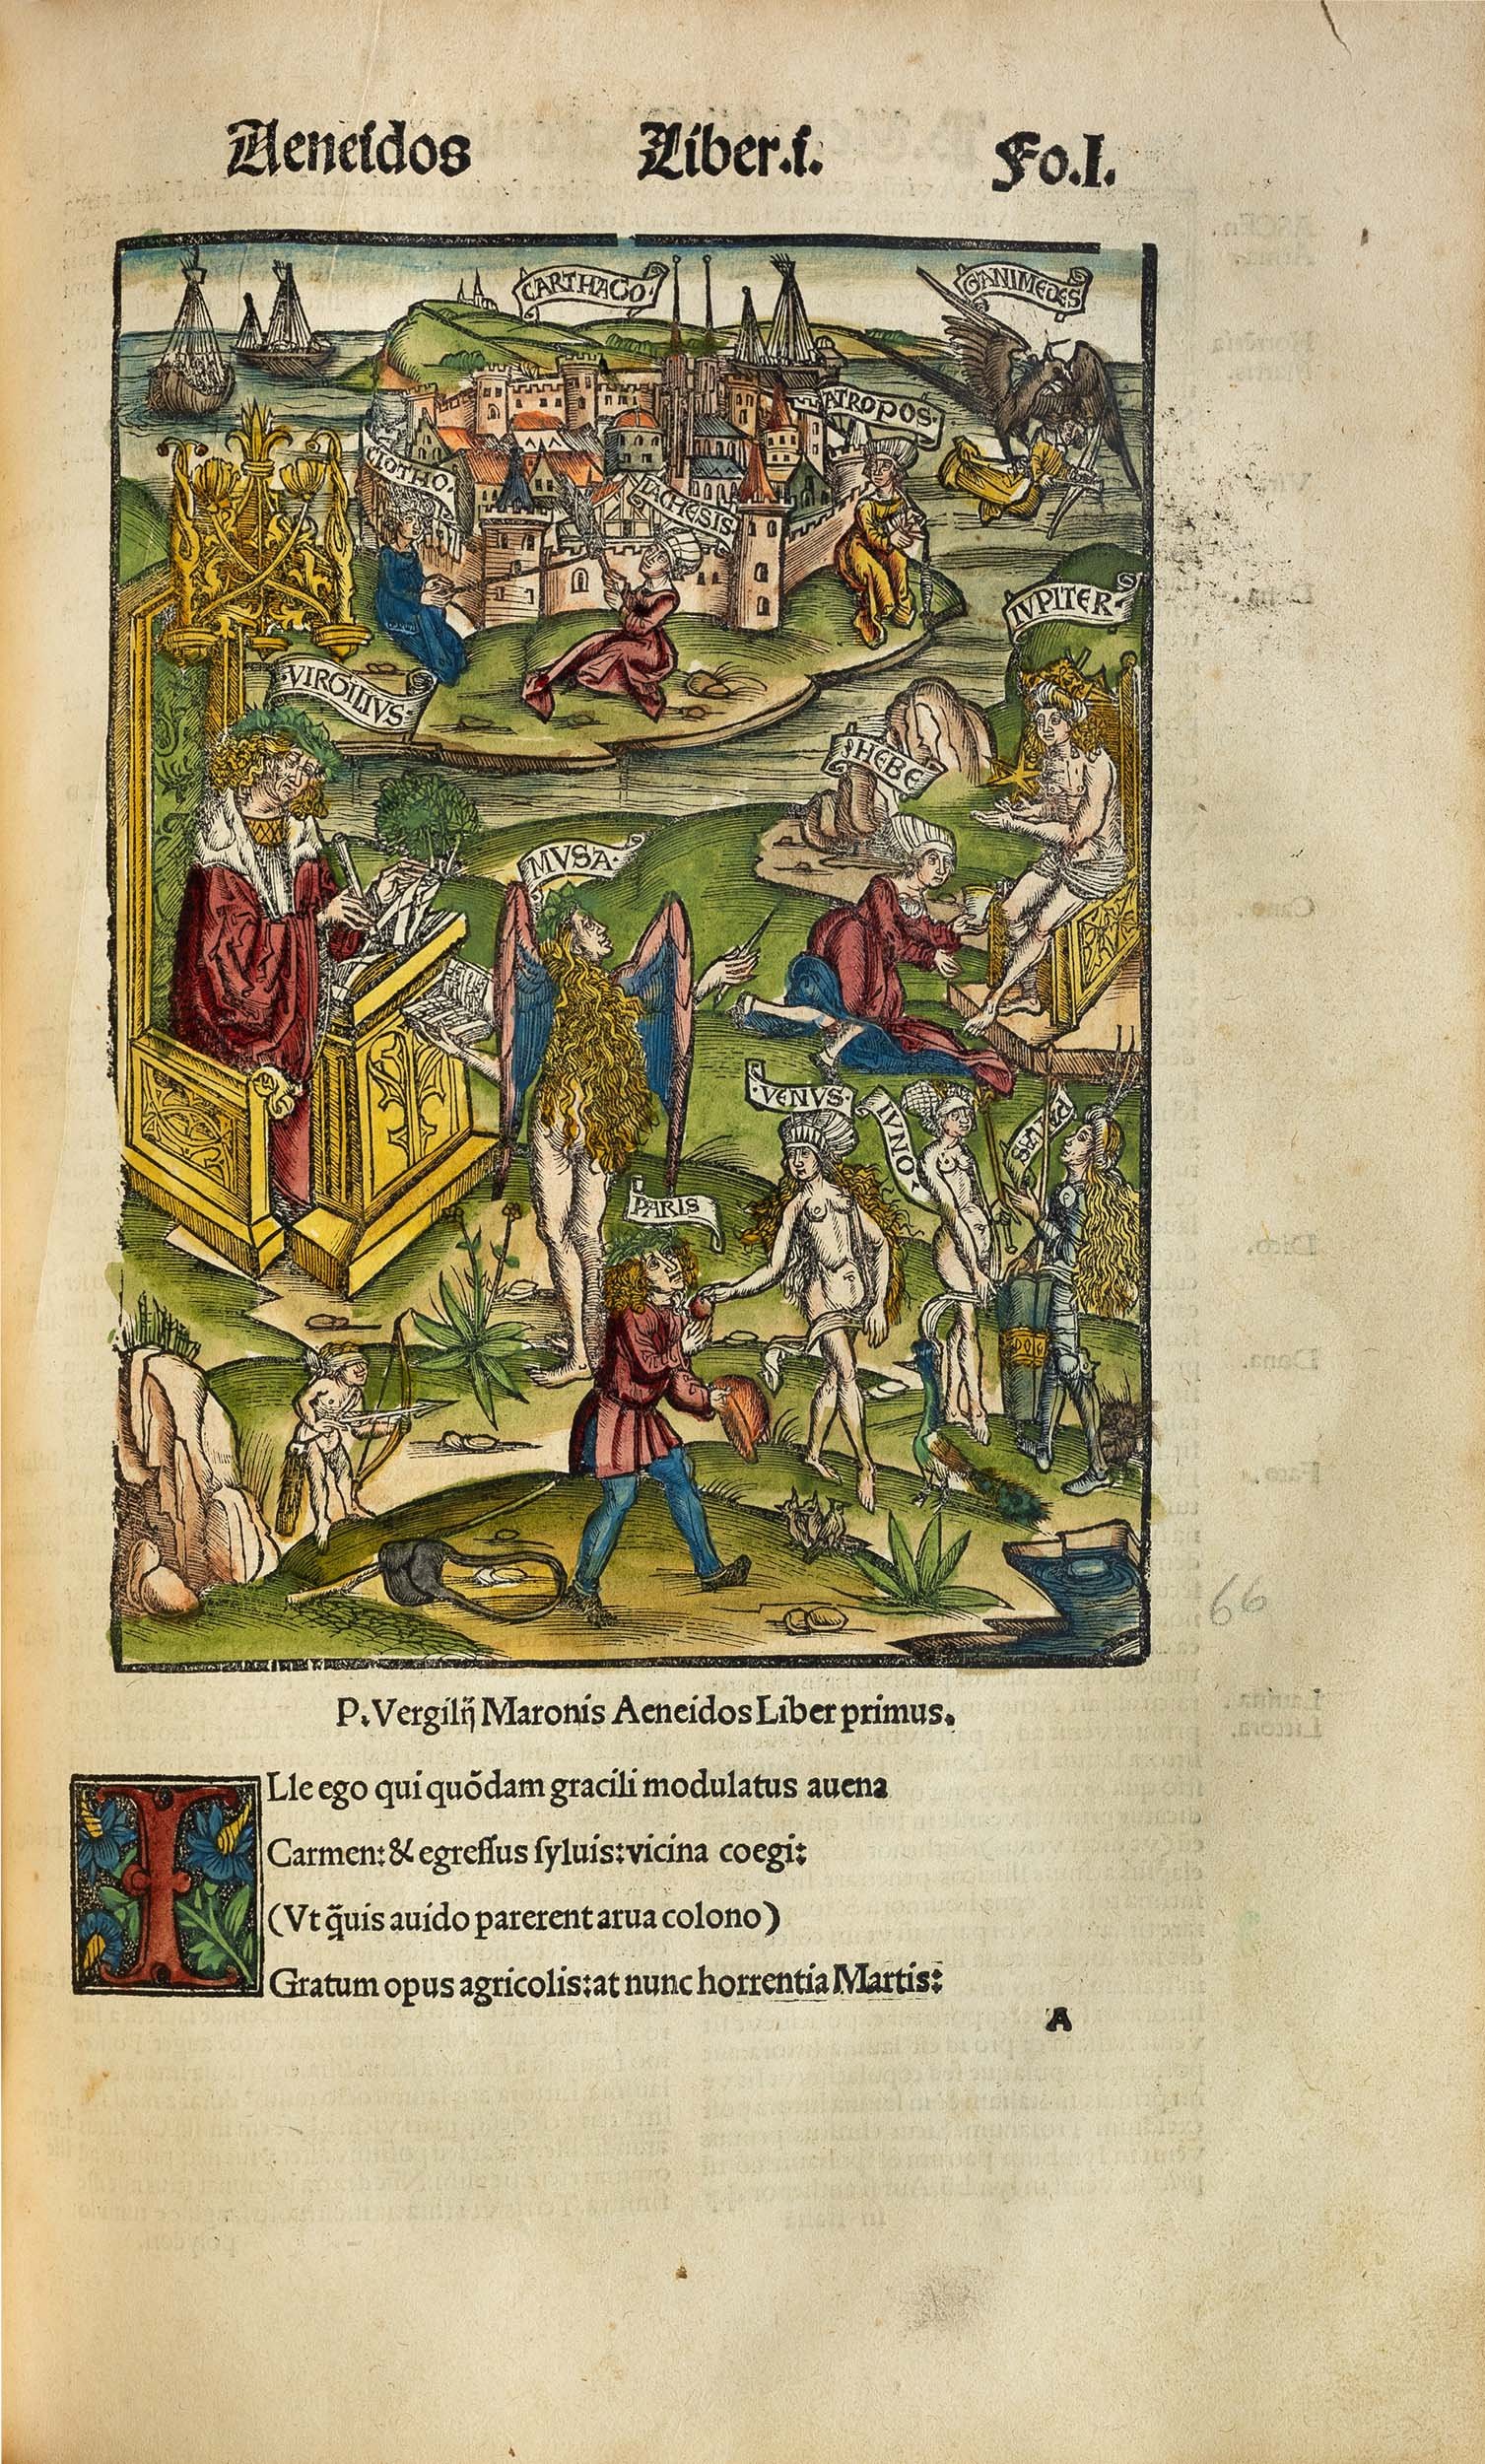 vergil-opera-1517-lyon-hand-coloured-woodcuts-for-sale-16.jpg